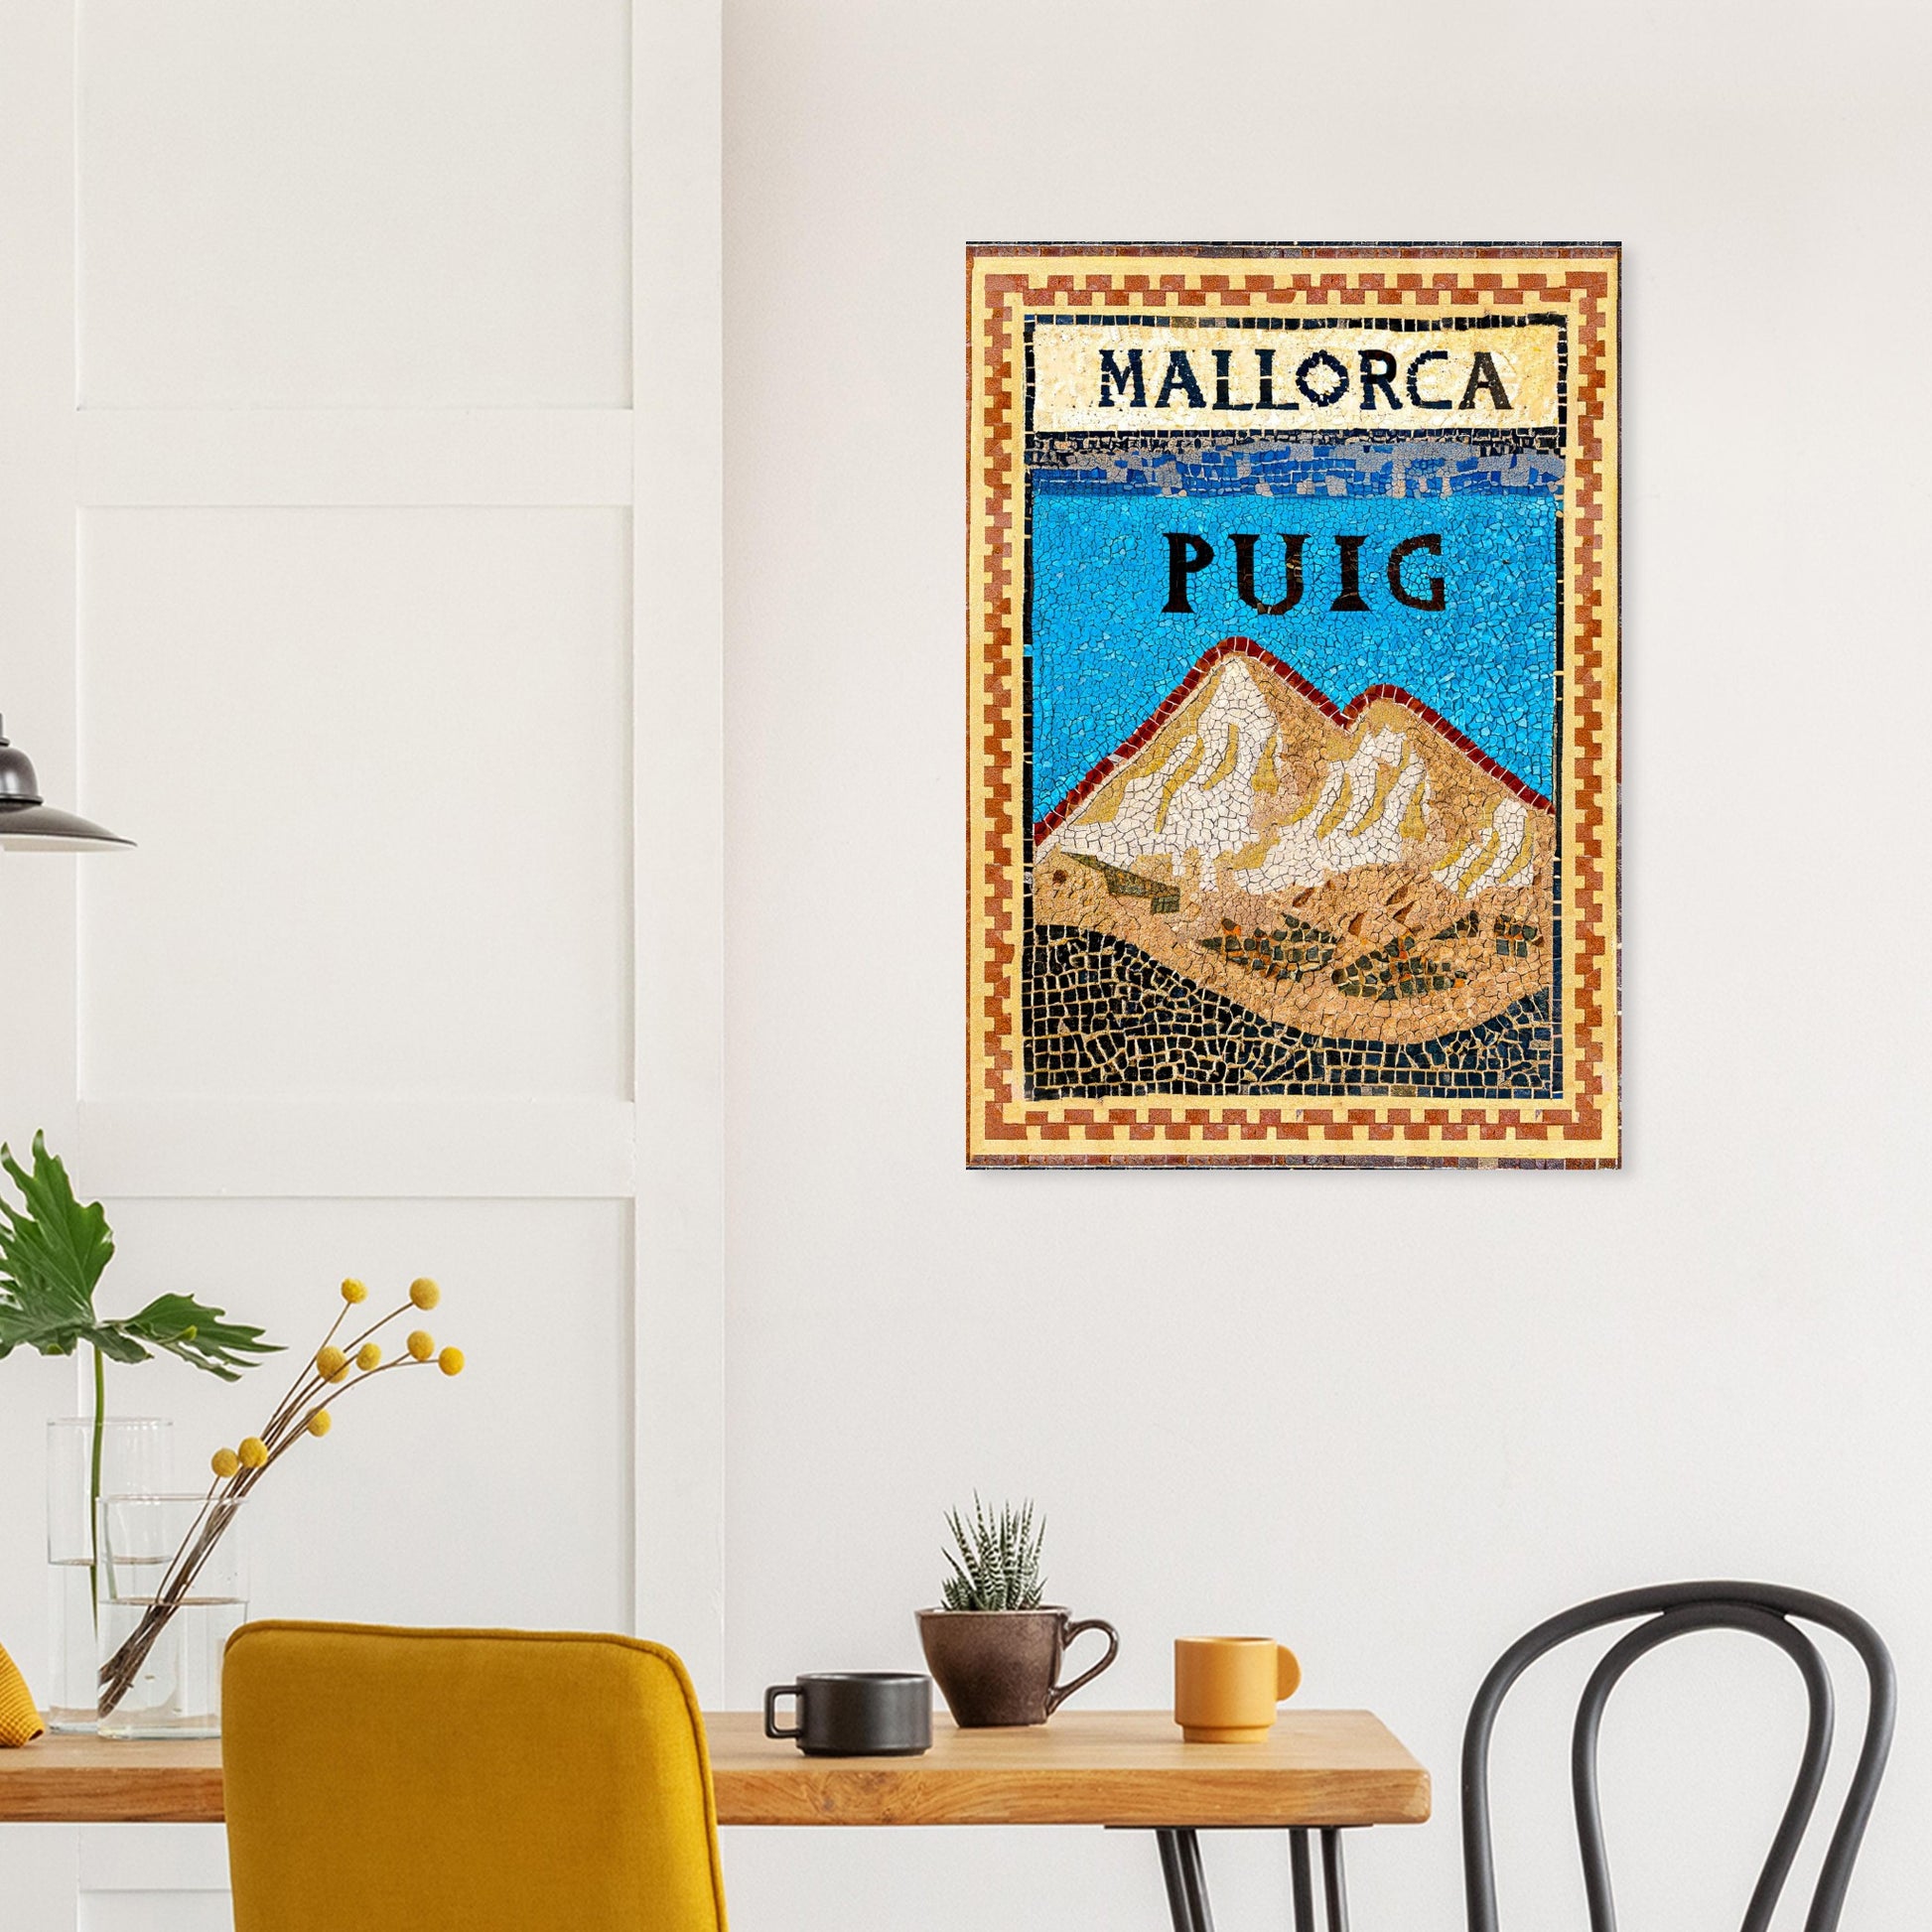 Puig Major, Mallorca by Posterify Design Poster on Premium Matte Paper - Posterify